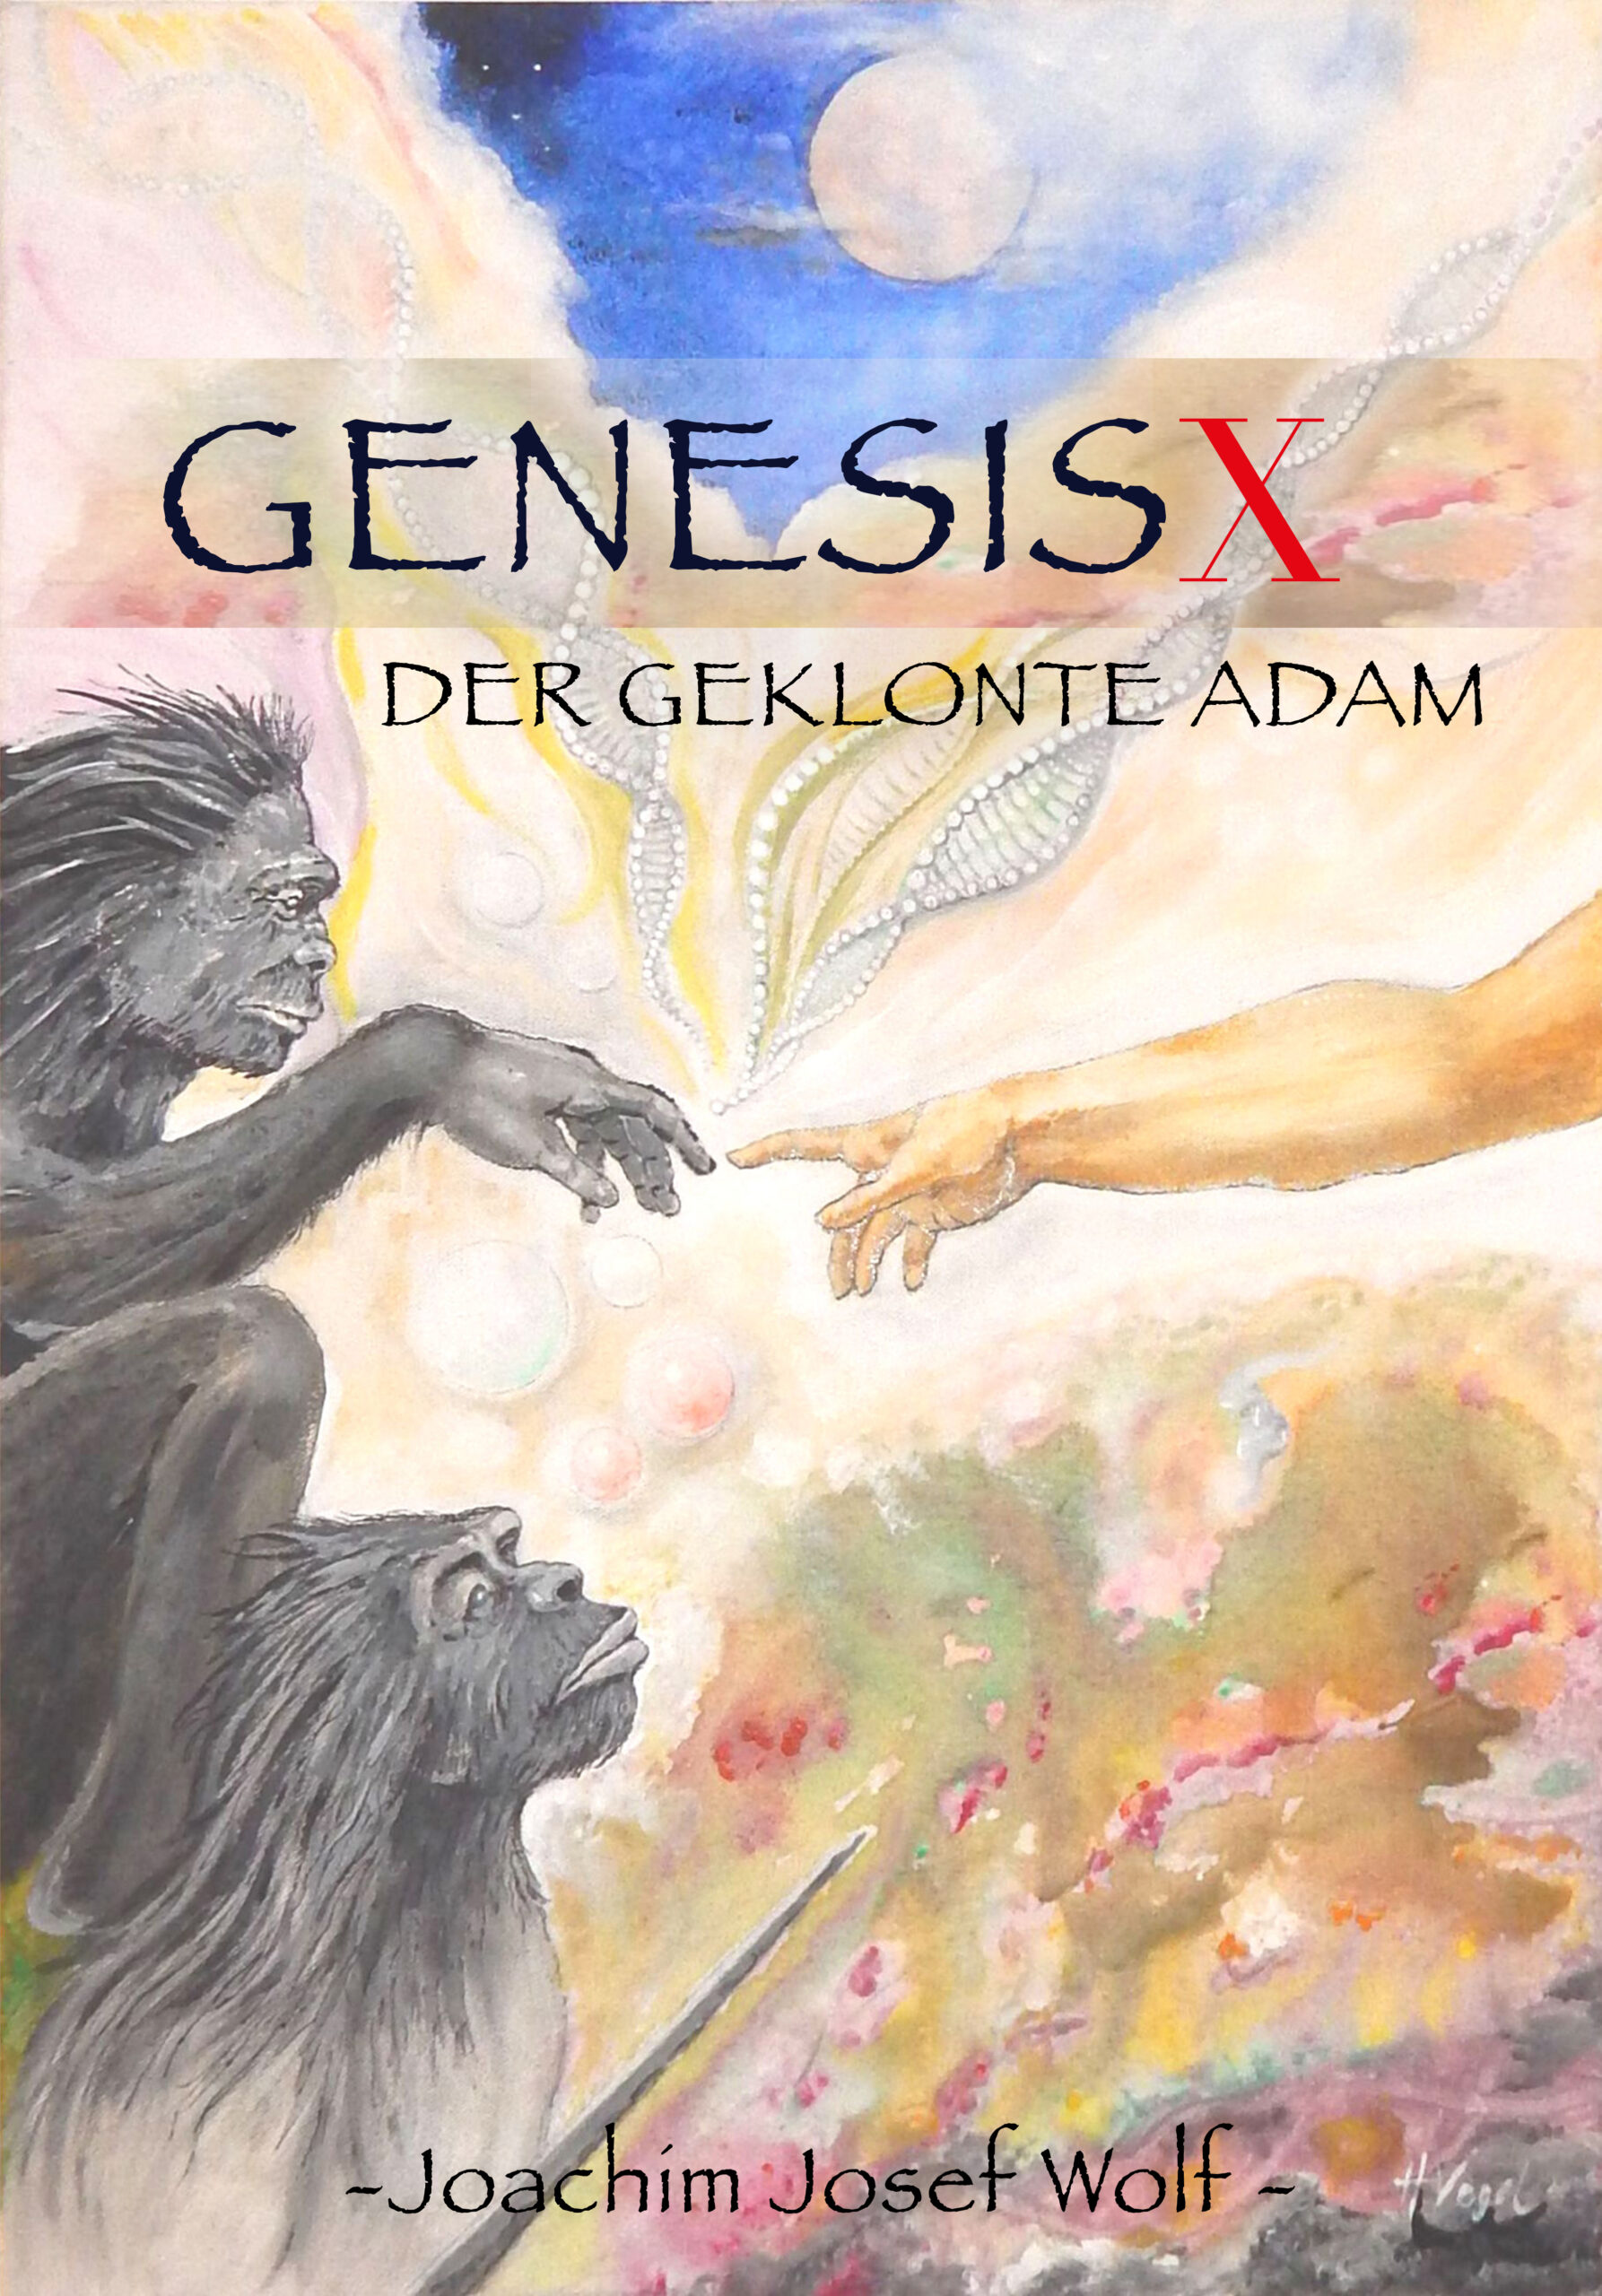 Genesis X Profilbild